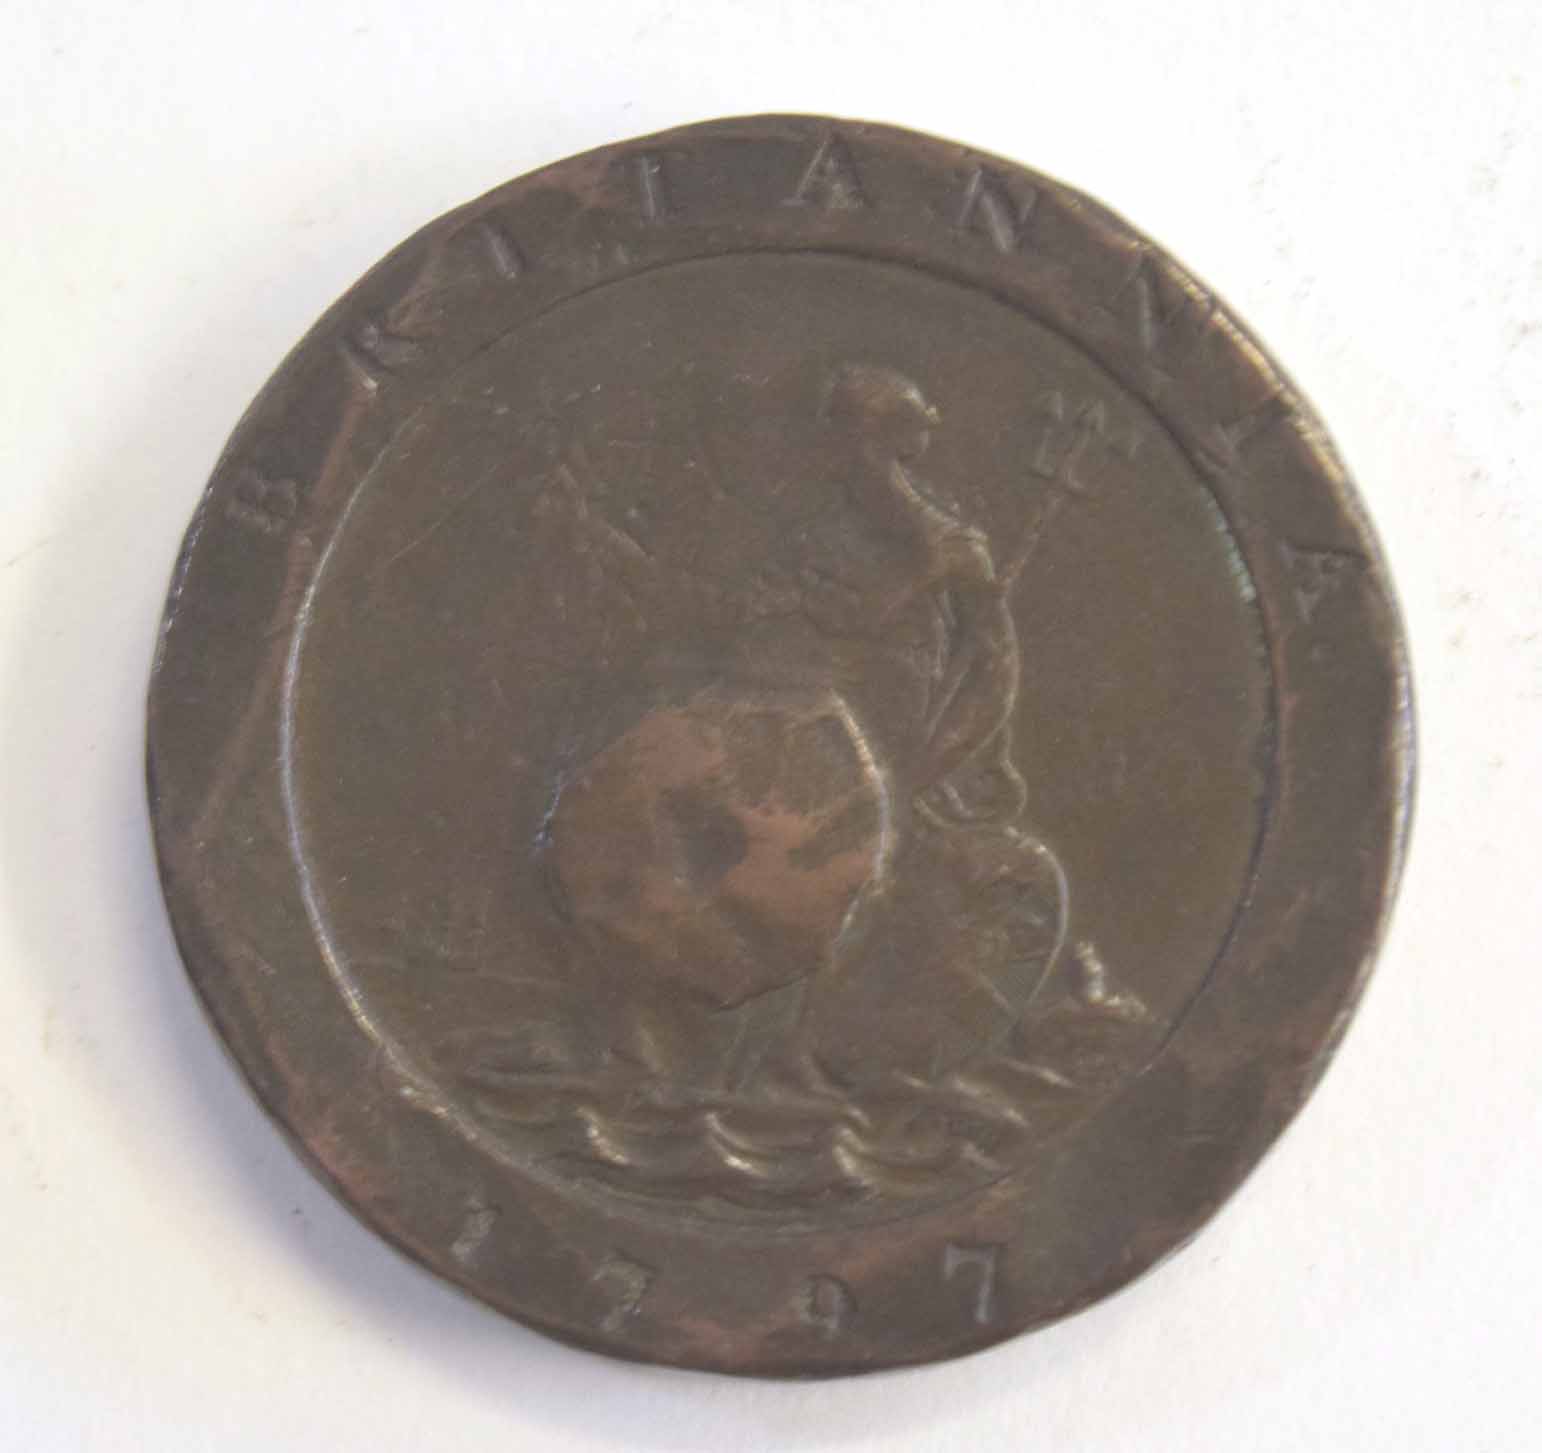 George III cartwheel coin dated 1797 - Image 2 of 2